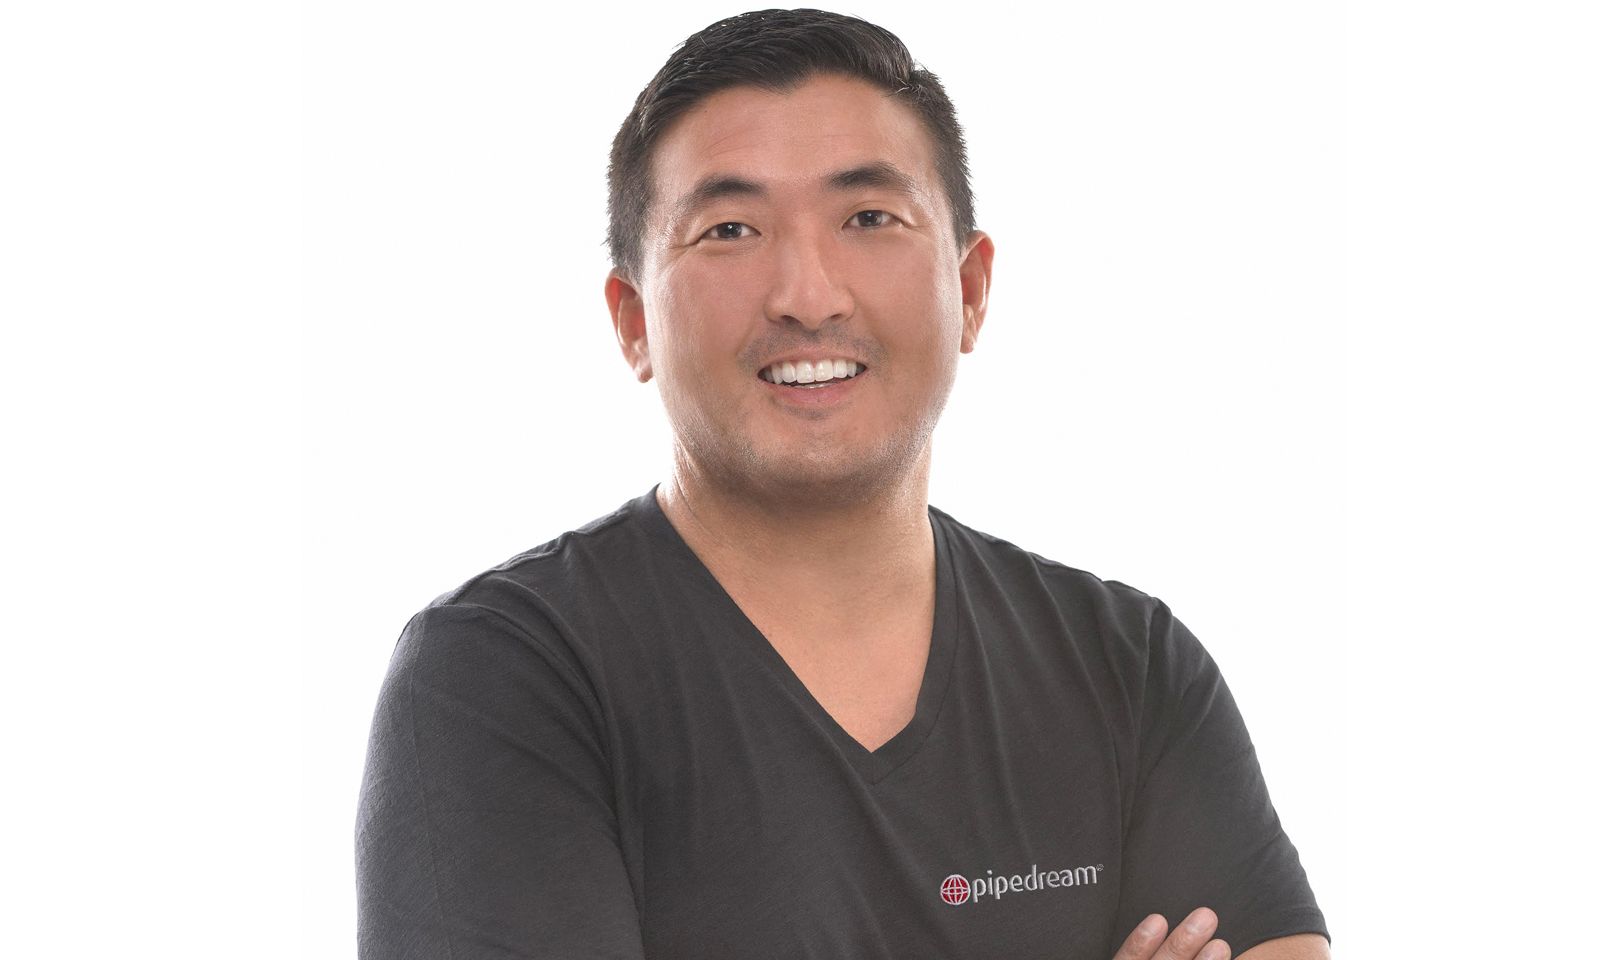 Getting To Know Pipedream’s New CEO Matthew Matsudaira